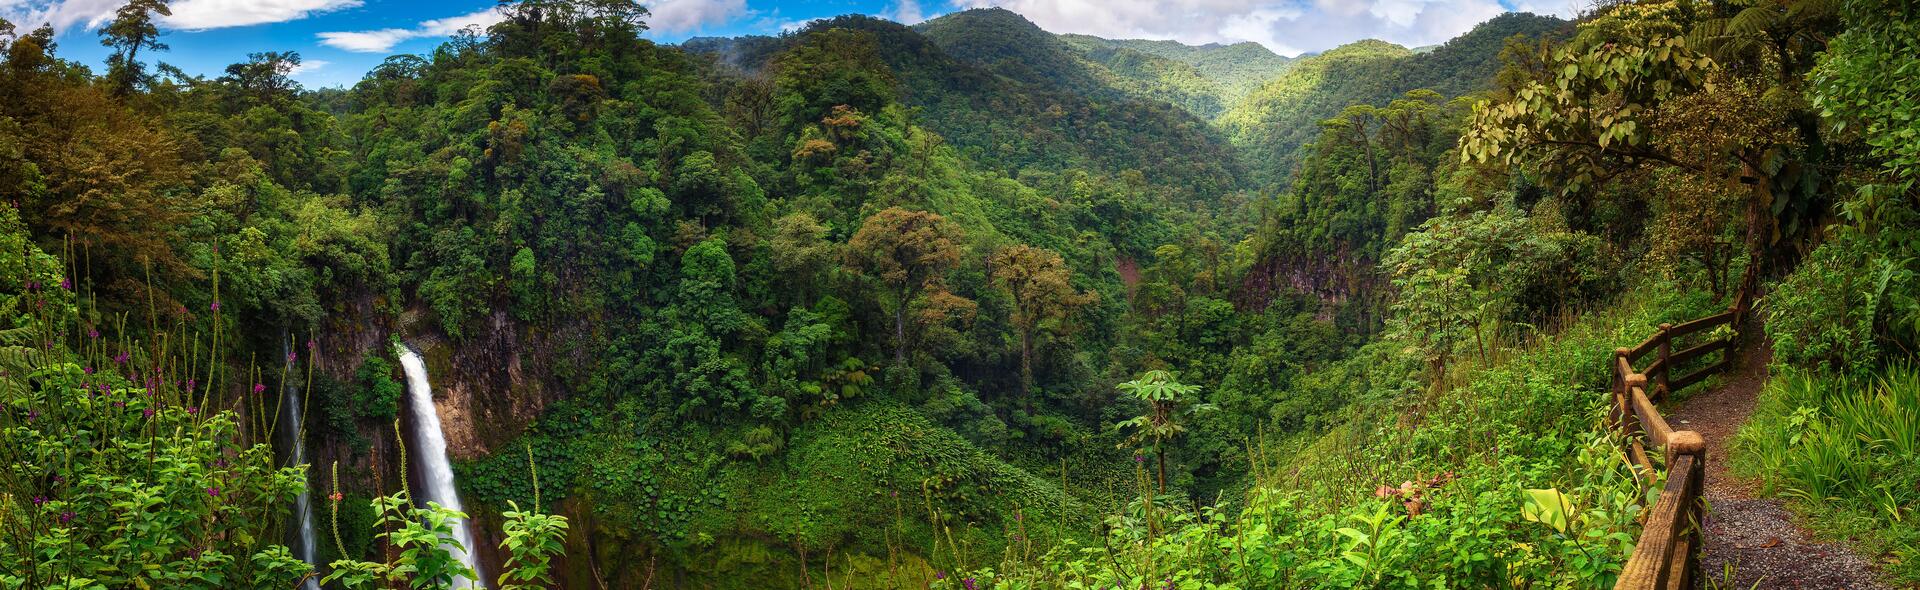 Trekking in Costa Rica: our ideas for adventure